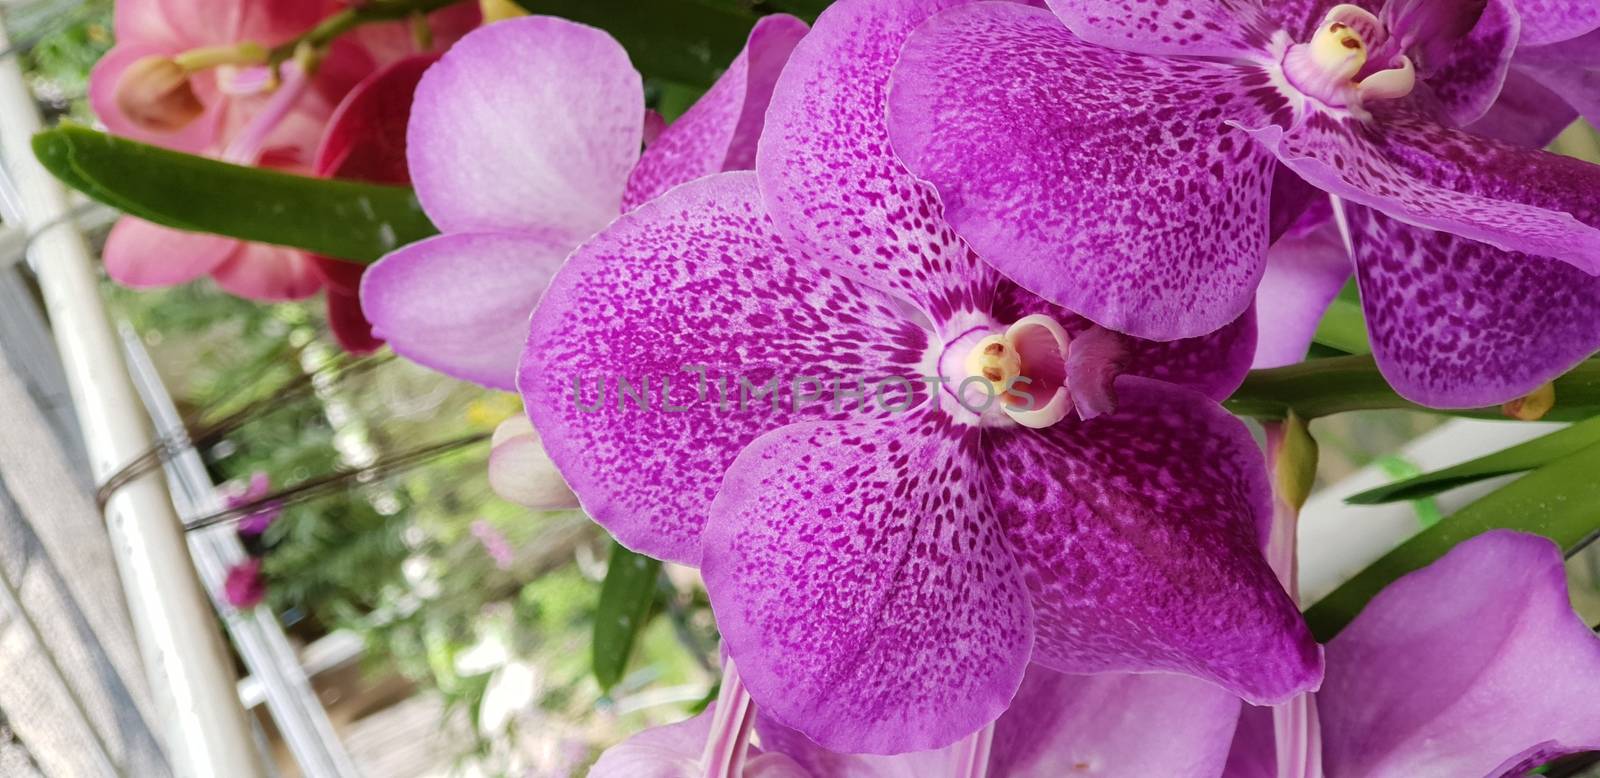 Flower (Orchidaceae or Orchid Flower) by PongMoji